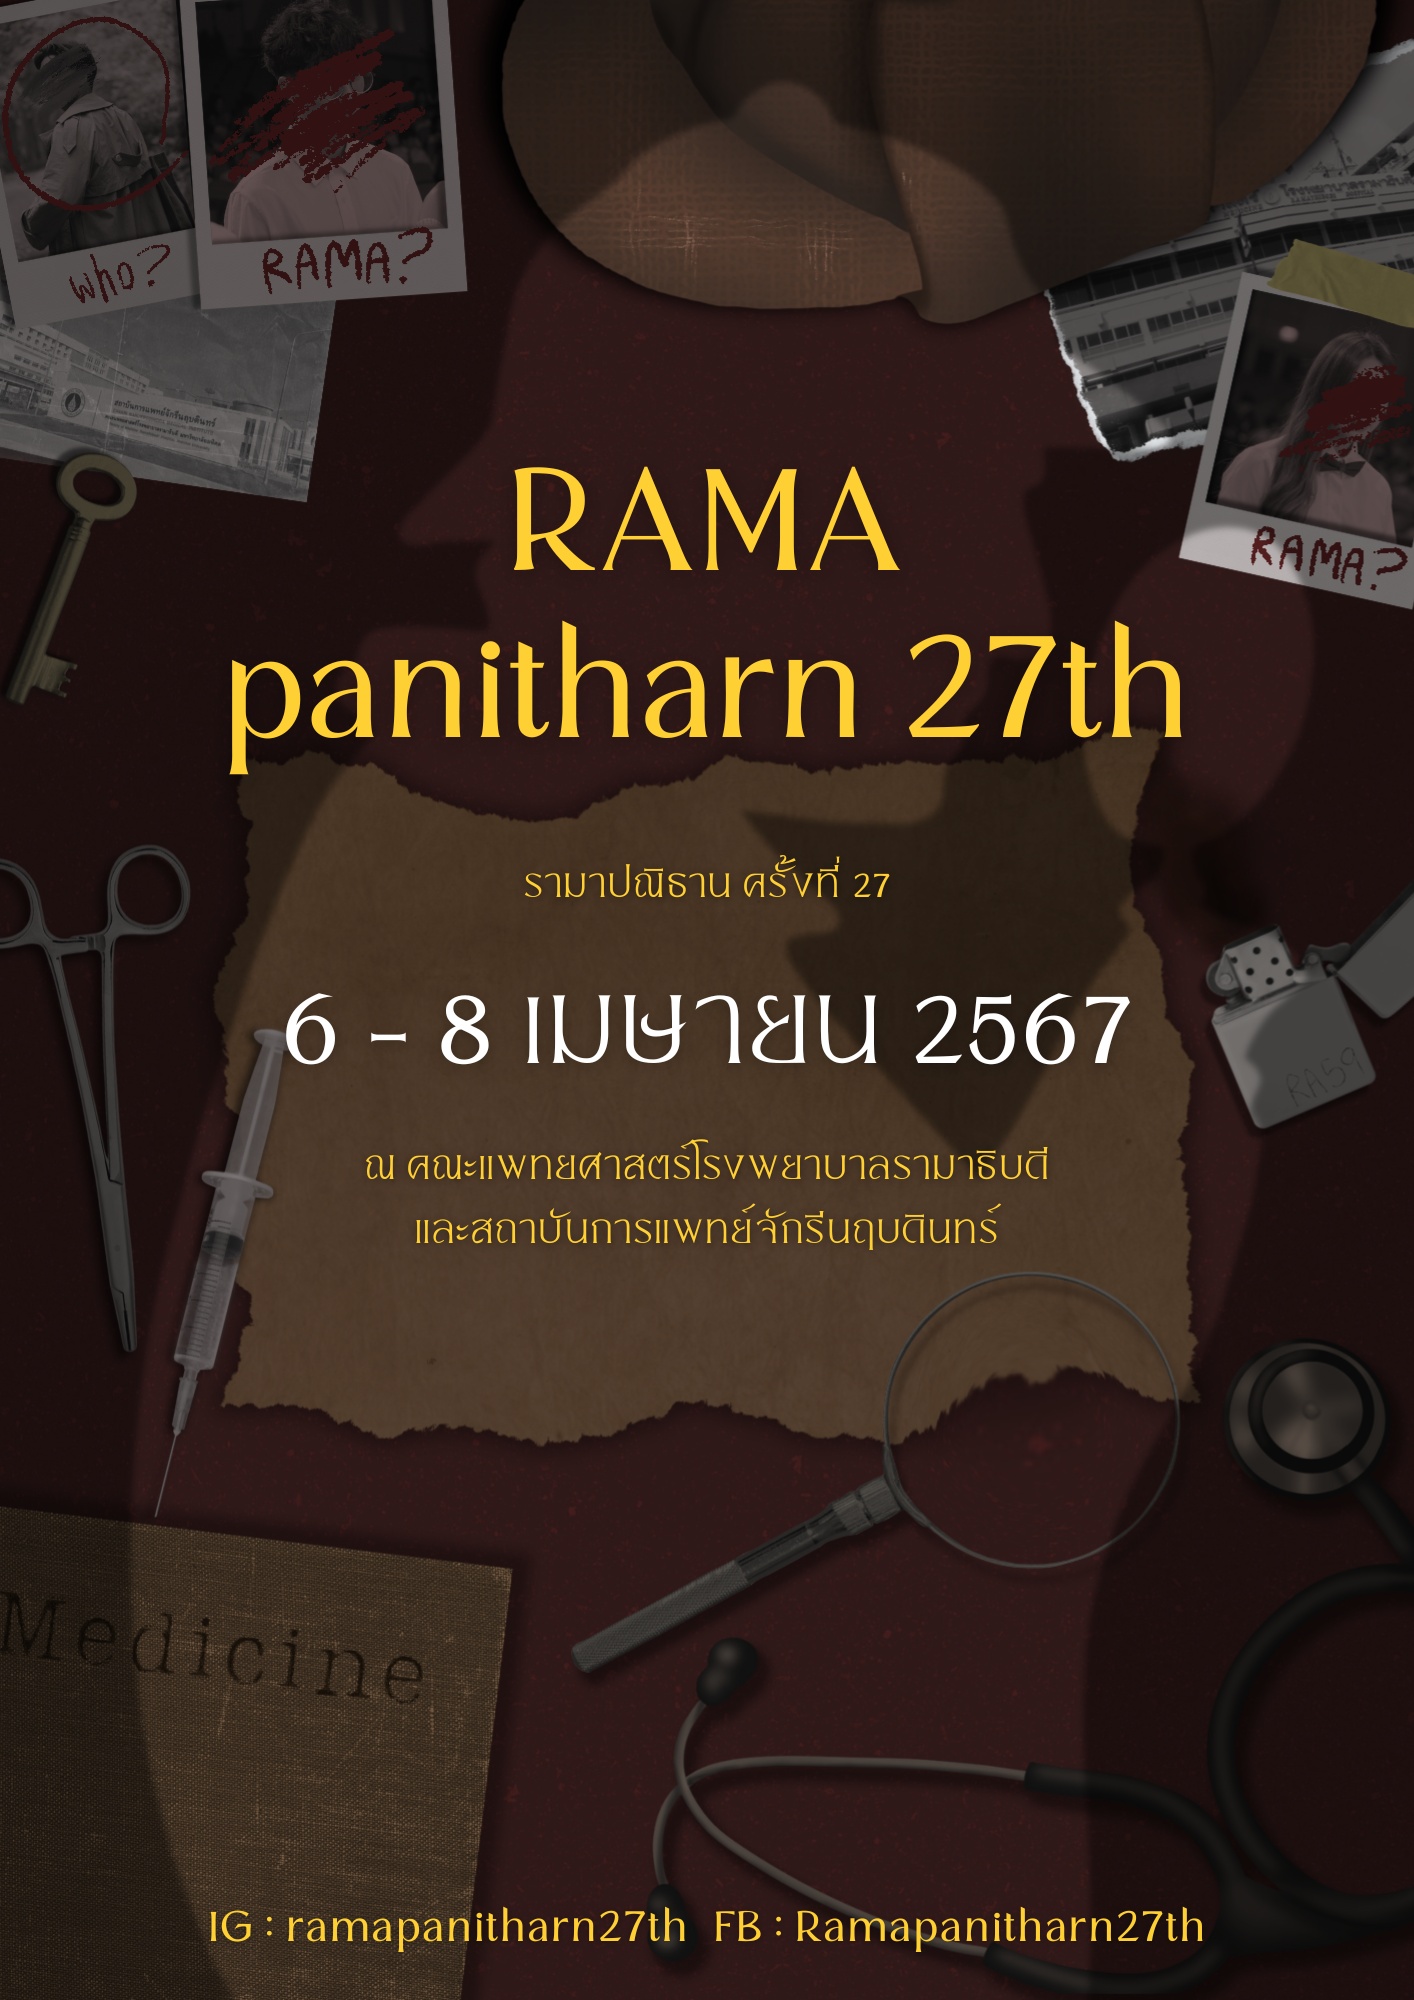 RAMA panitharn 27th รามาปณิธาน ครั้งที่ 27